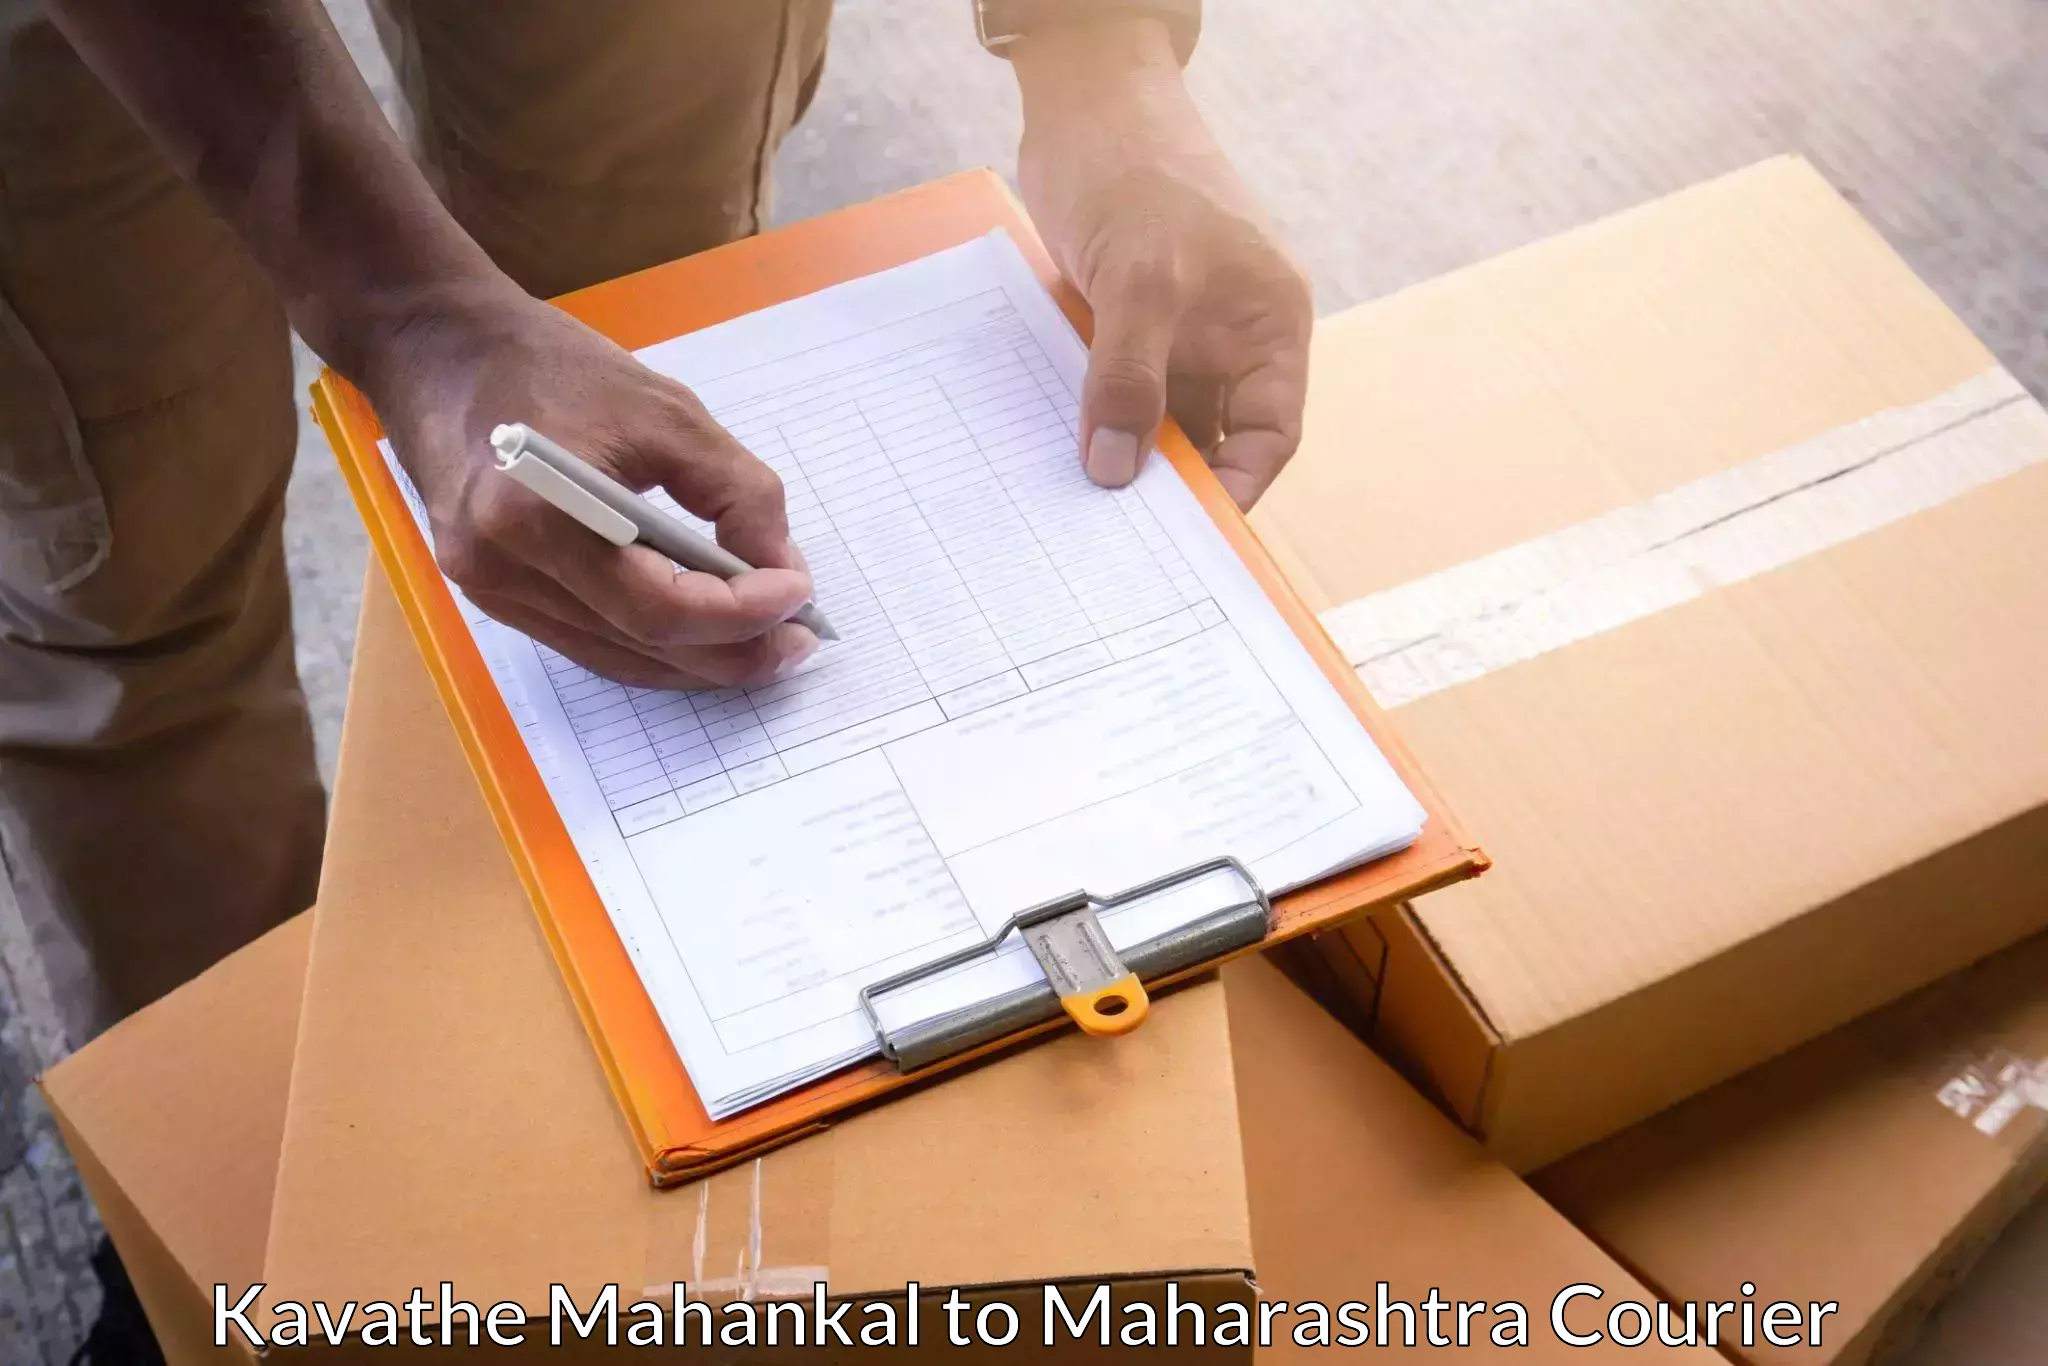 Full-service courier options Kavathe Mahankal to Sangamner